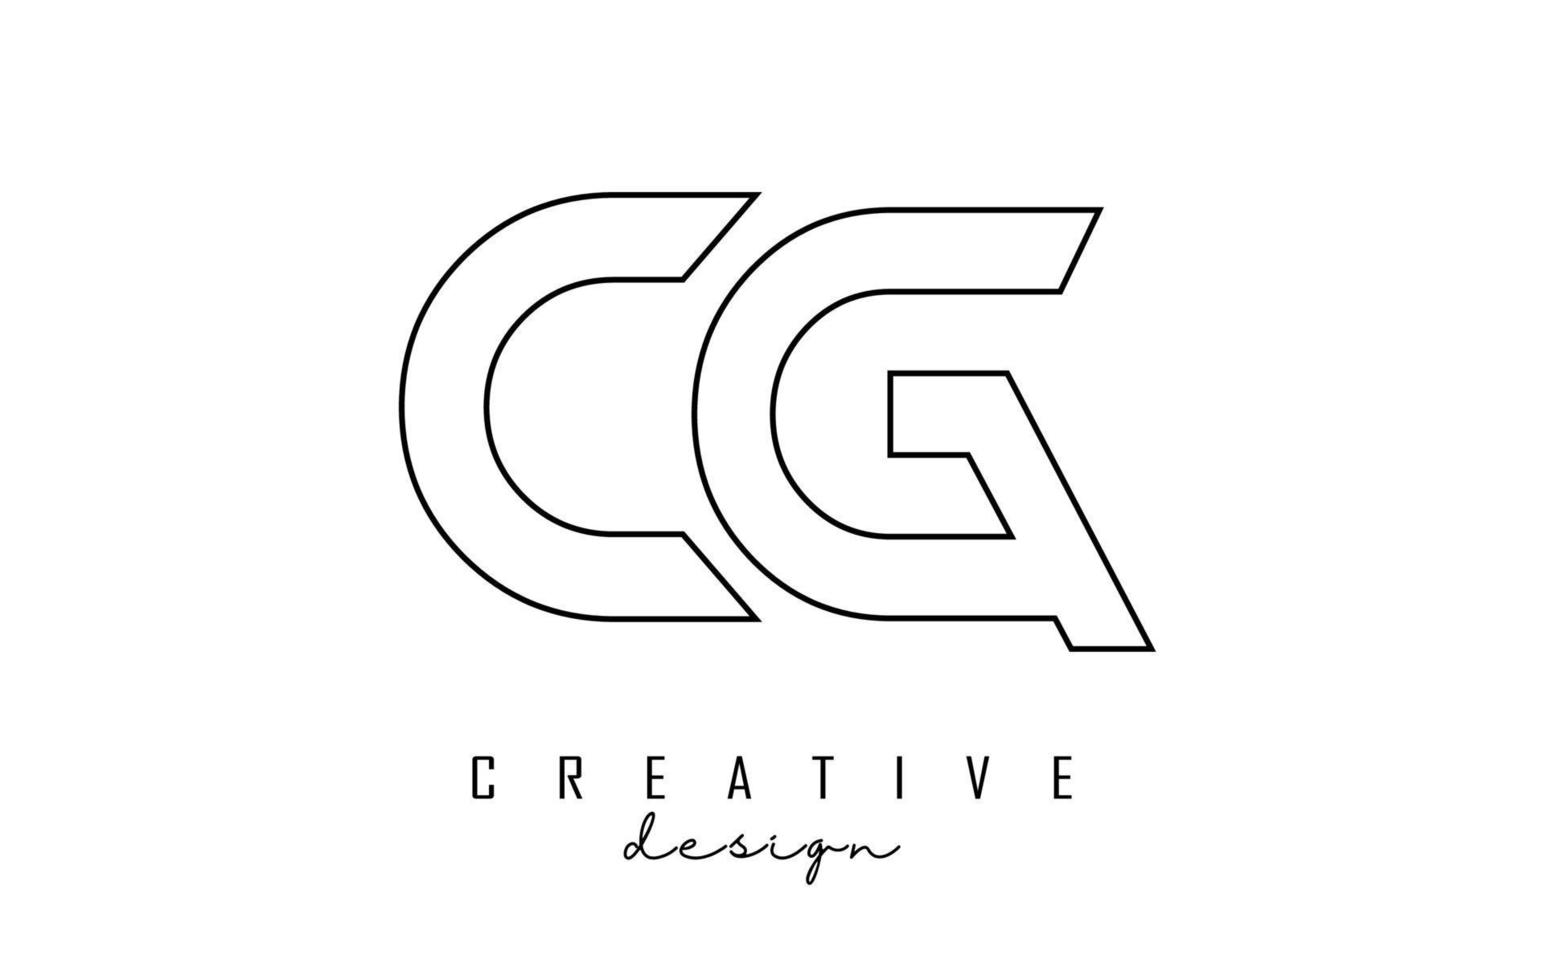 delinear o logotipo das letras cg com um design minimalista. logotipo da letra geométrica. vetor